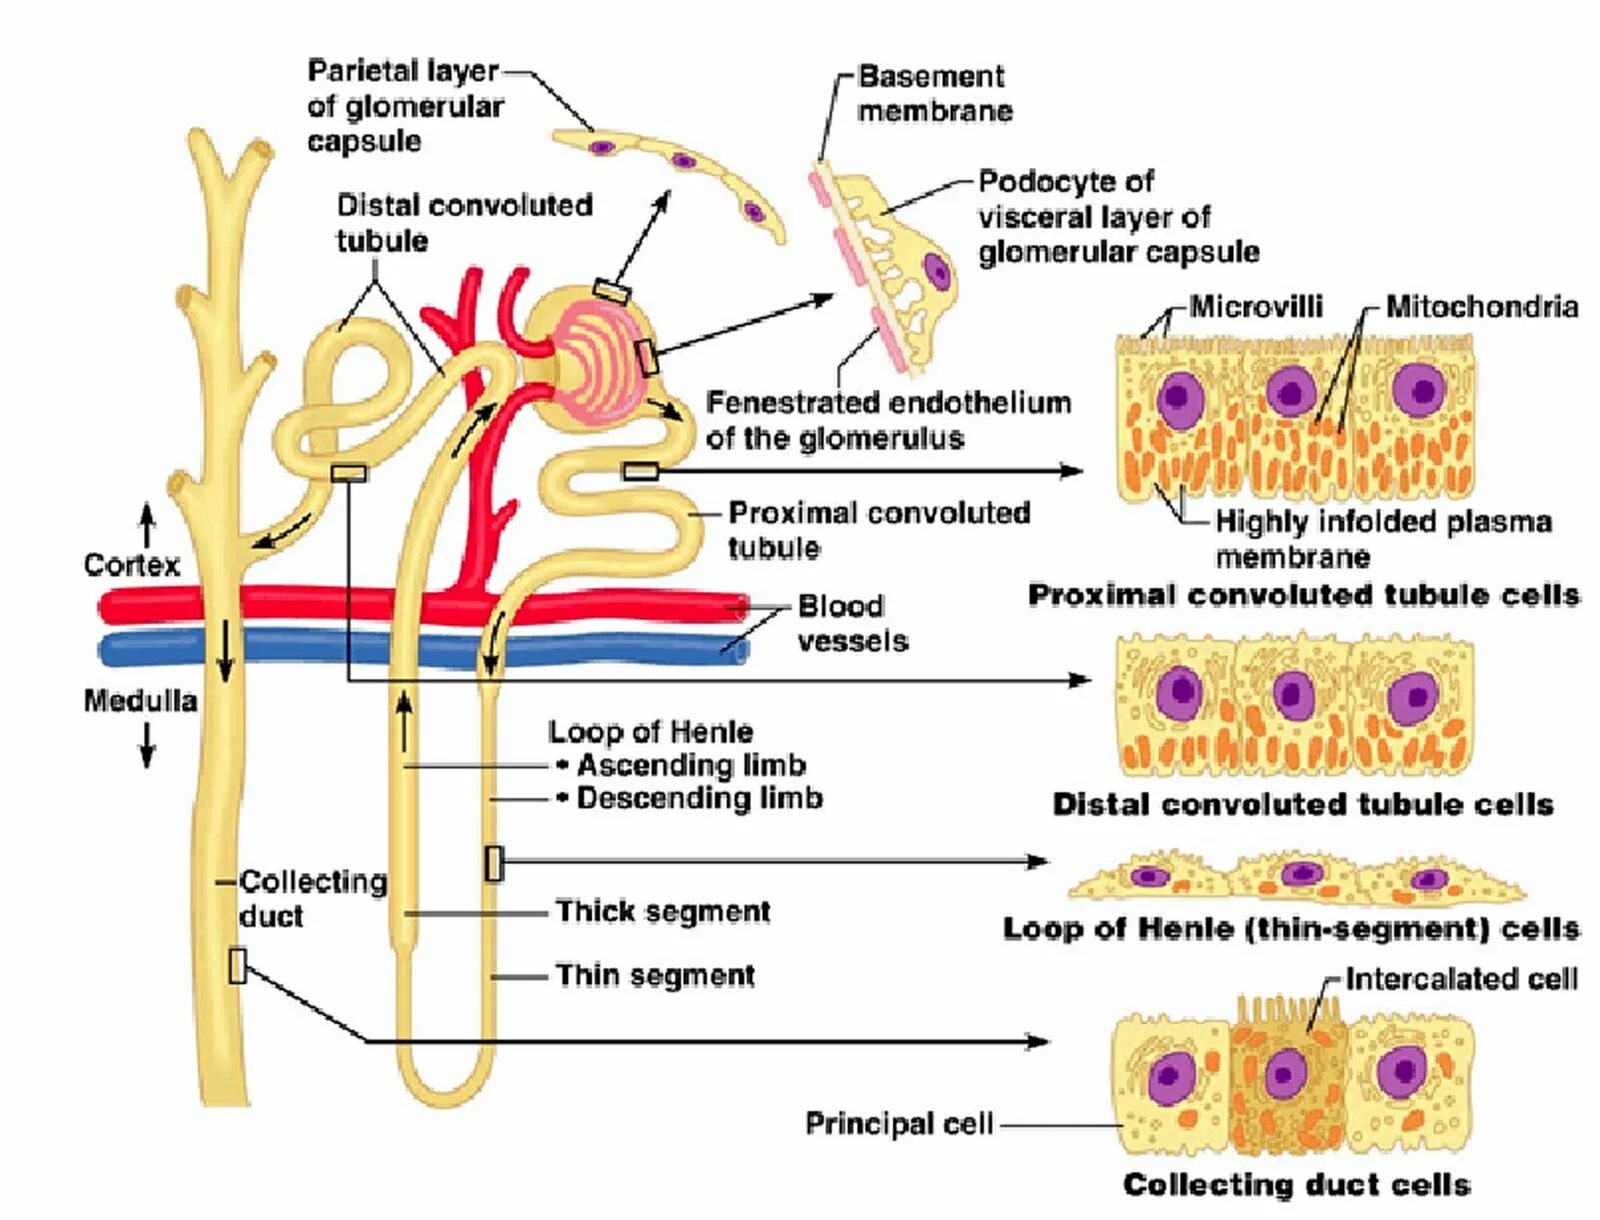 Kidney nephron. Nephron structure and functions. Tubule. The proximal tubules of the nephron. Нефрон ультрафильтрация